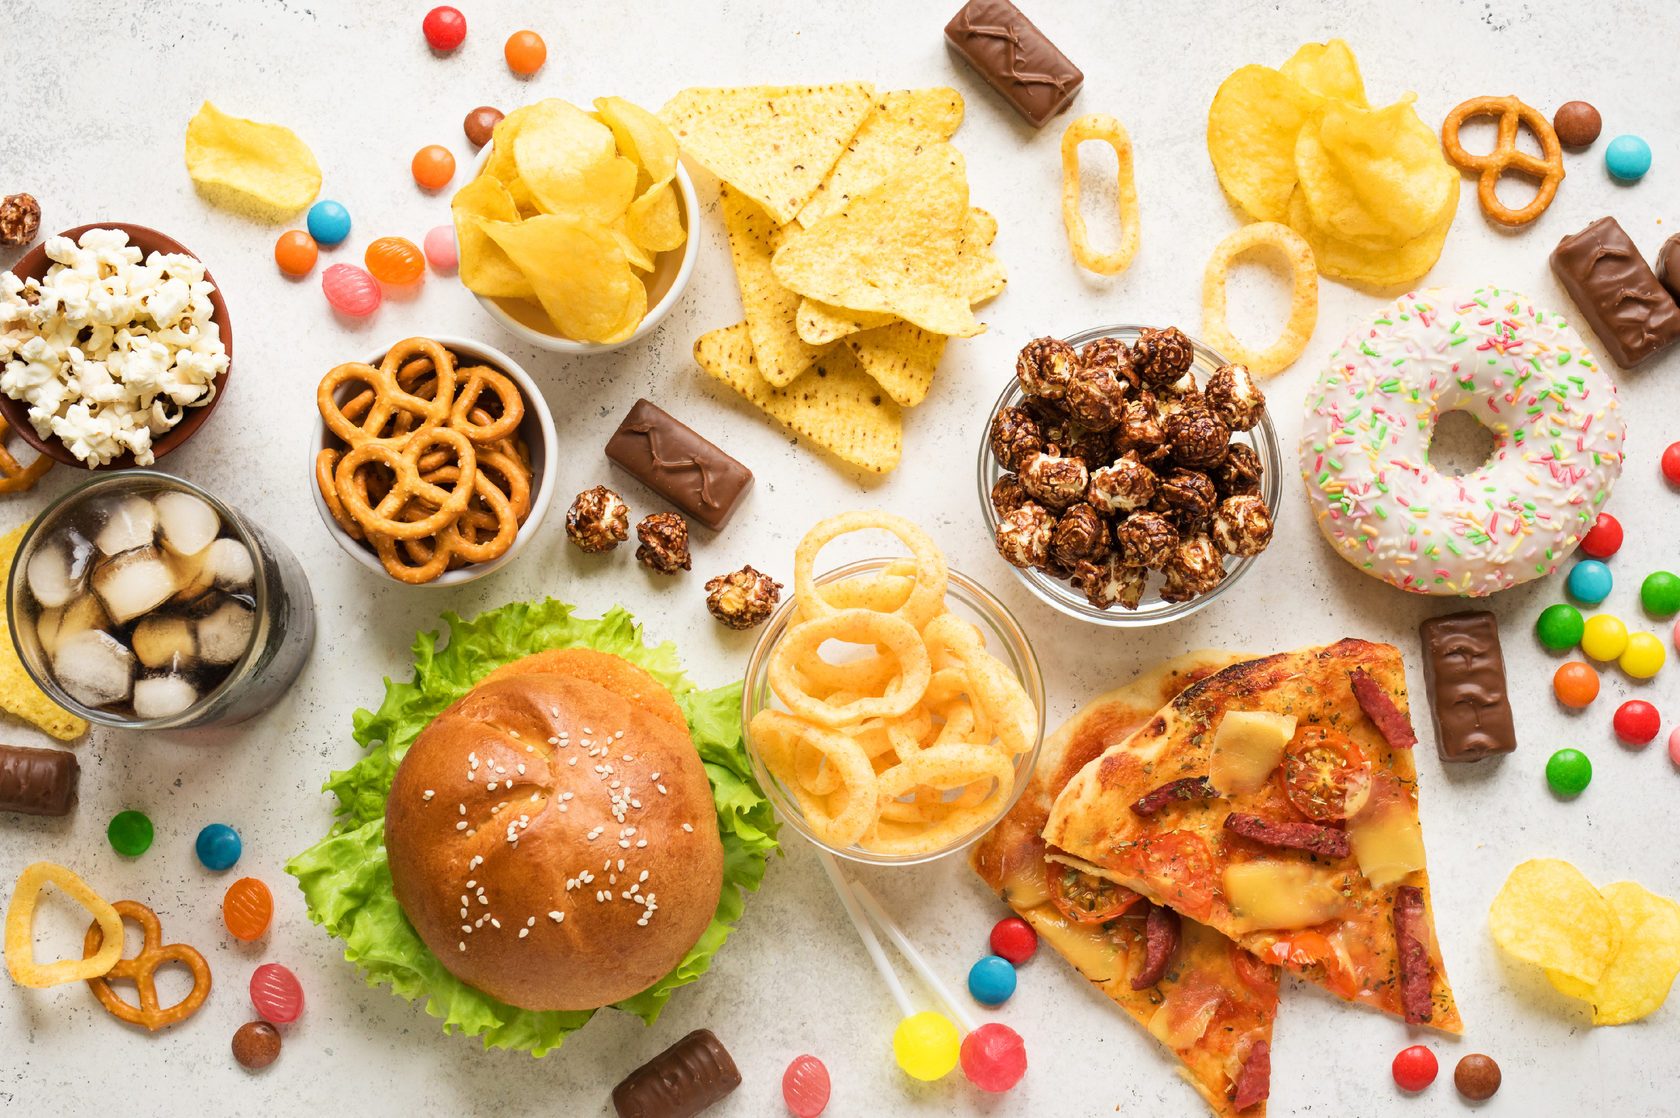 assortment of unhealthy snacks and foods overhead studio